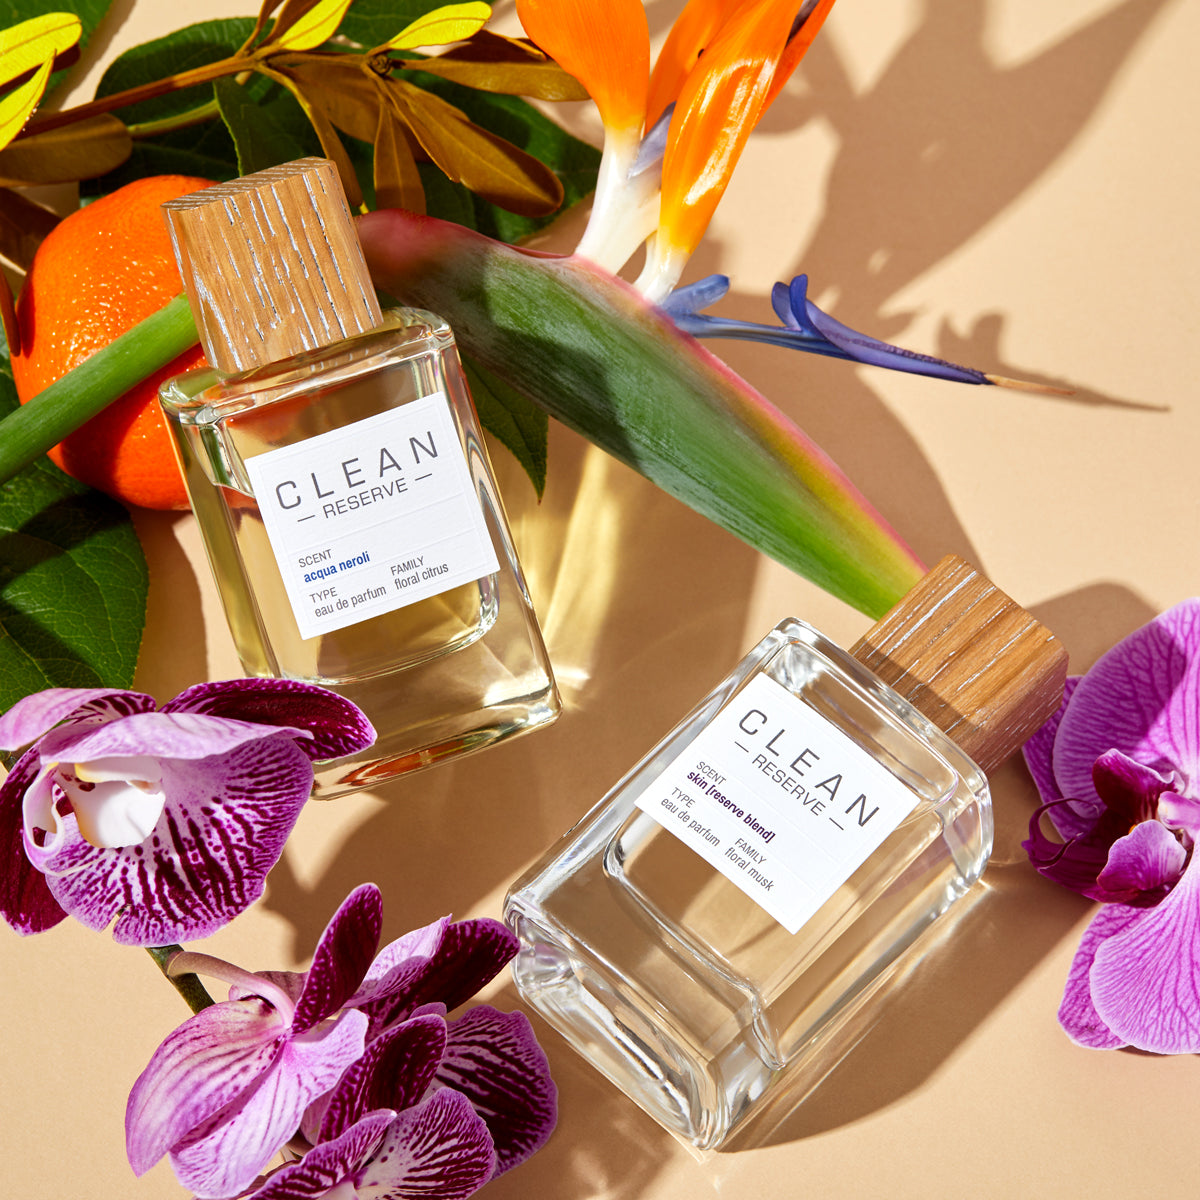 Clean reserve Skin and Acqua Neroli fragrances